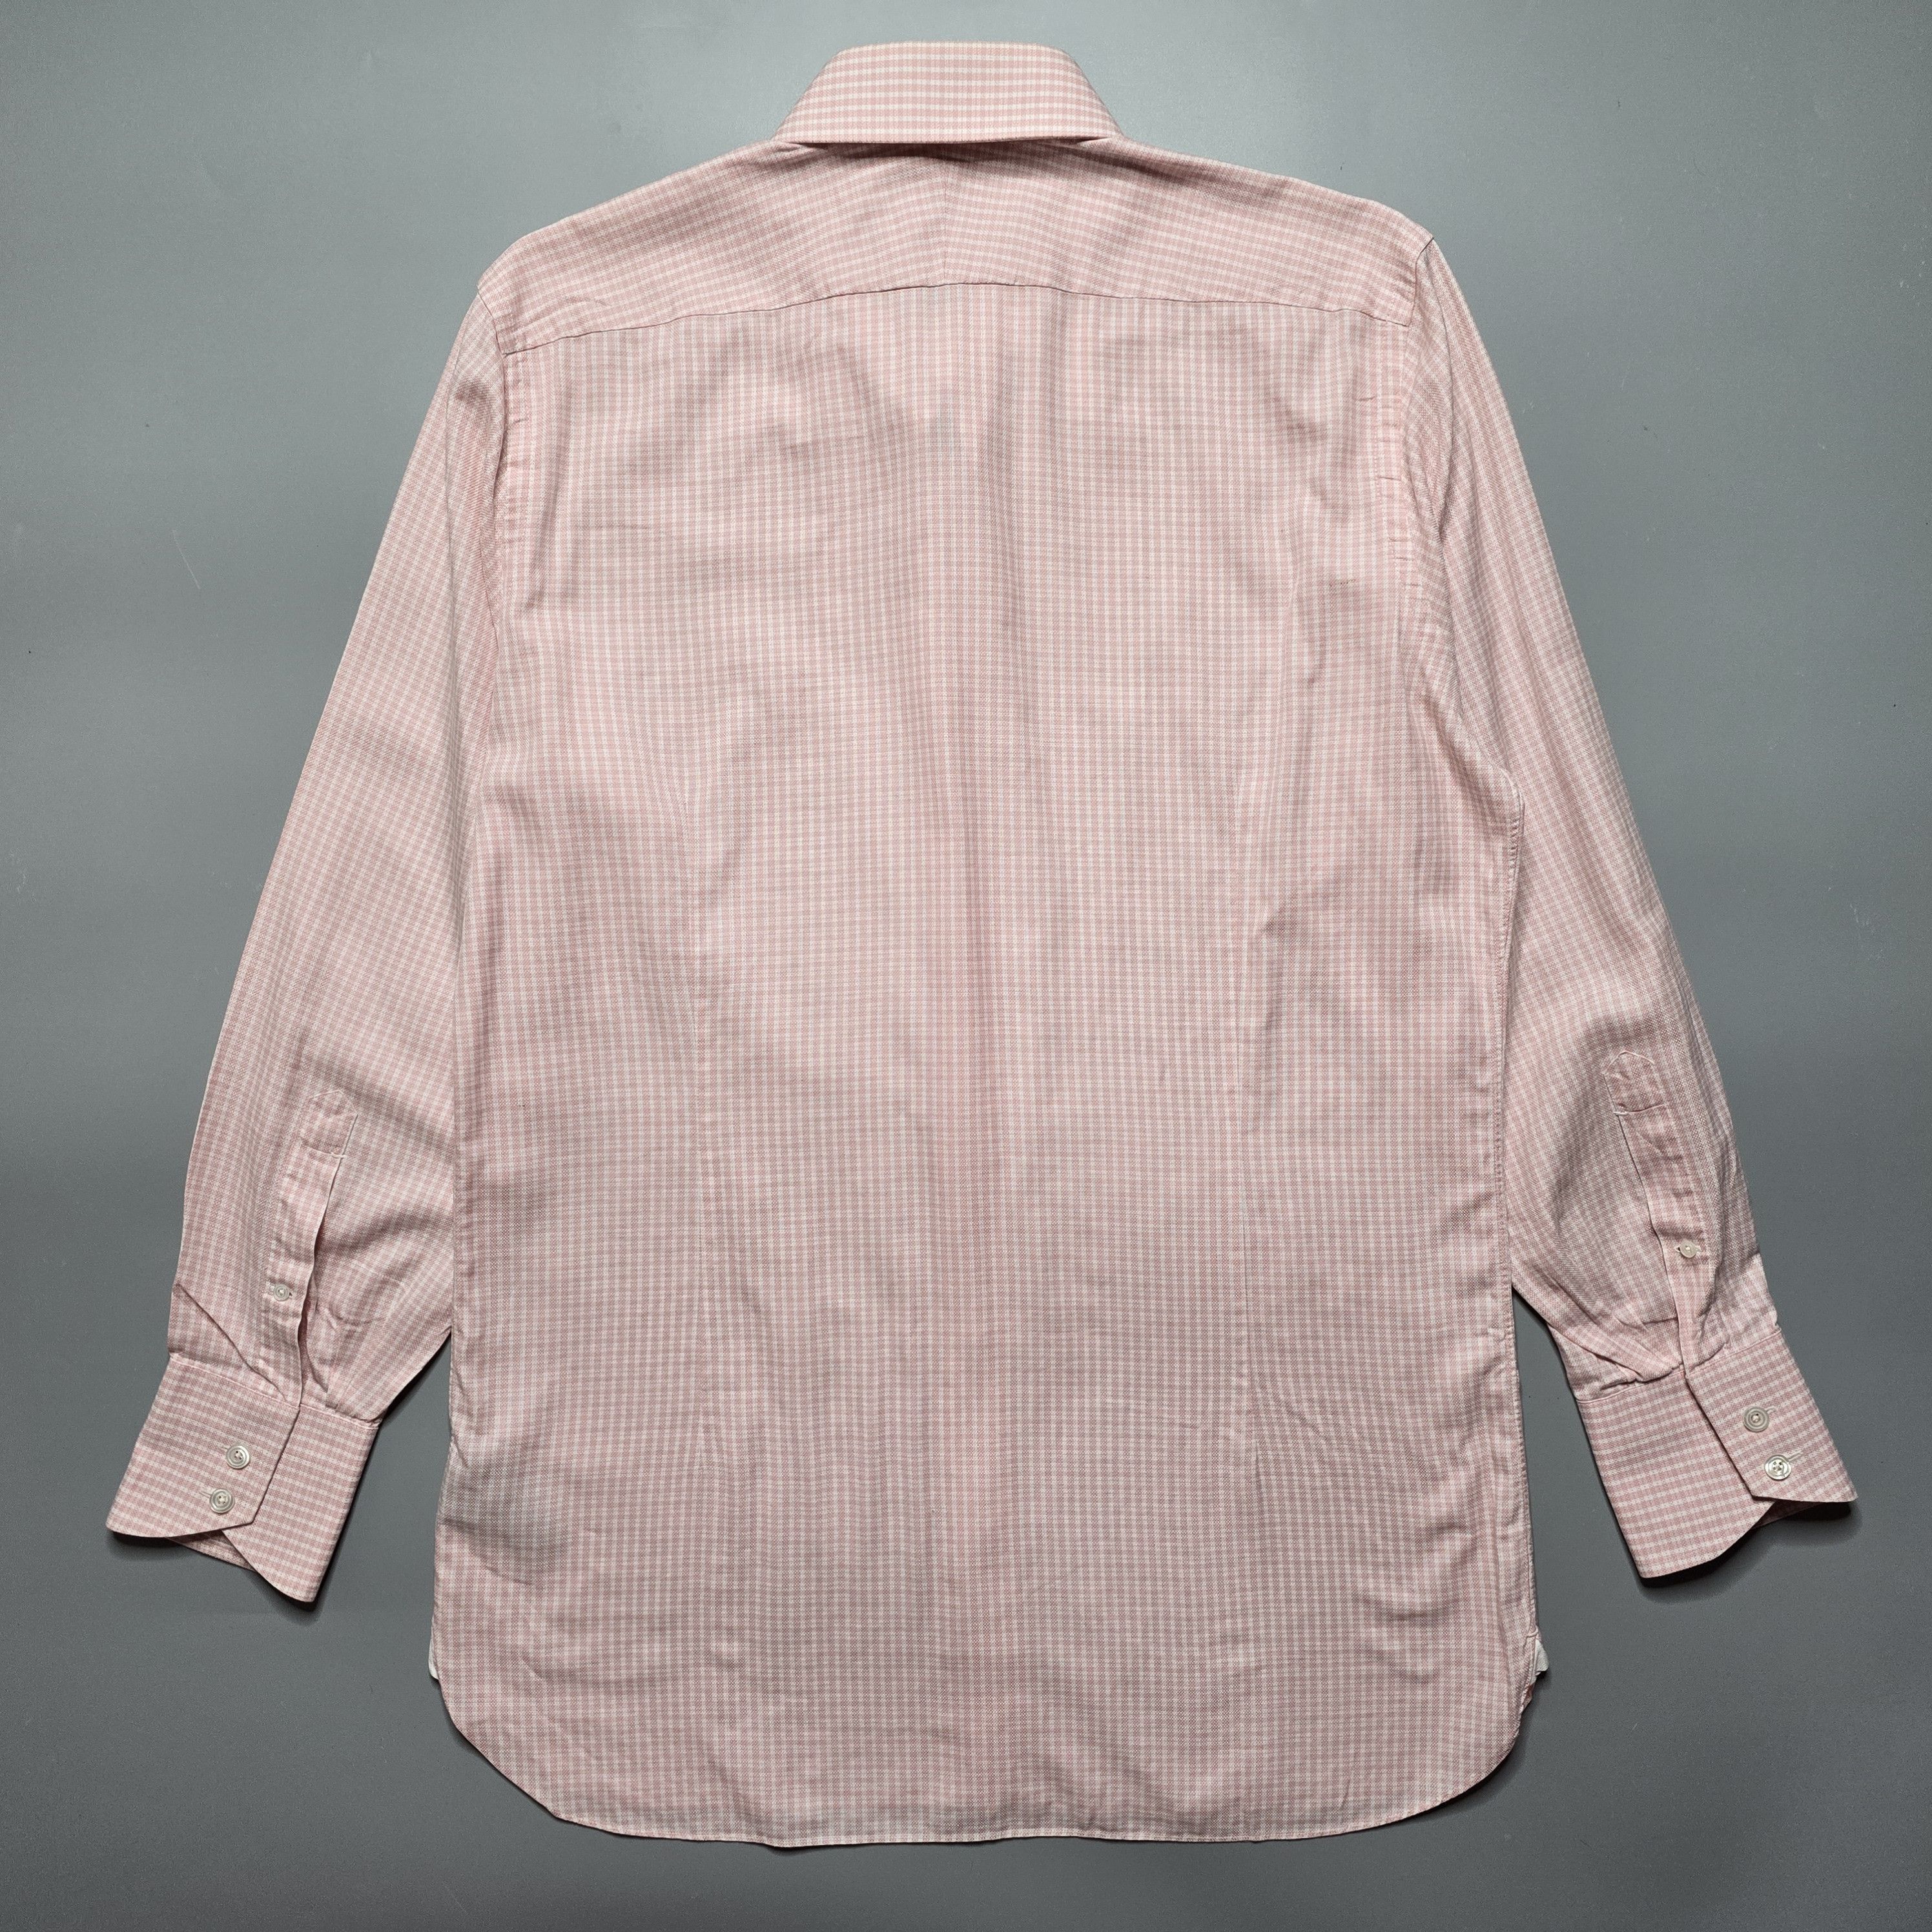 Tom Ford - Salmon Gingham Dress Shirt - 2